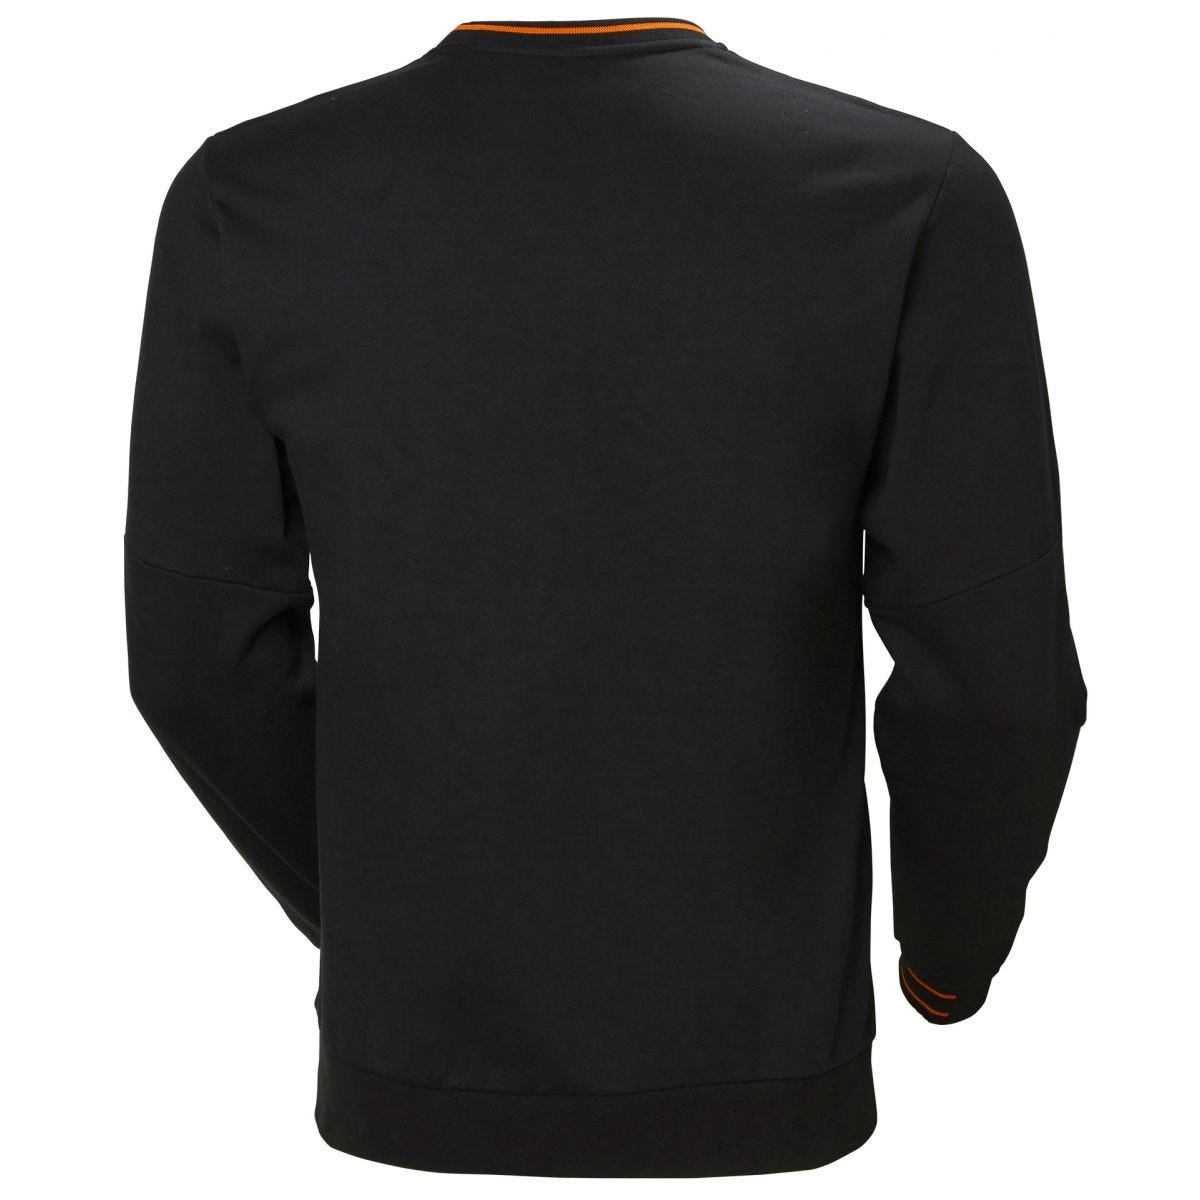 Sweatshirt Kensington Noir - Helly Hansen - Taille 2XL 1